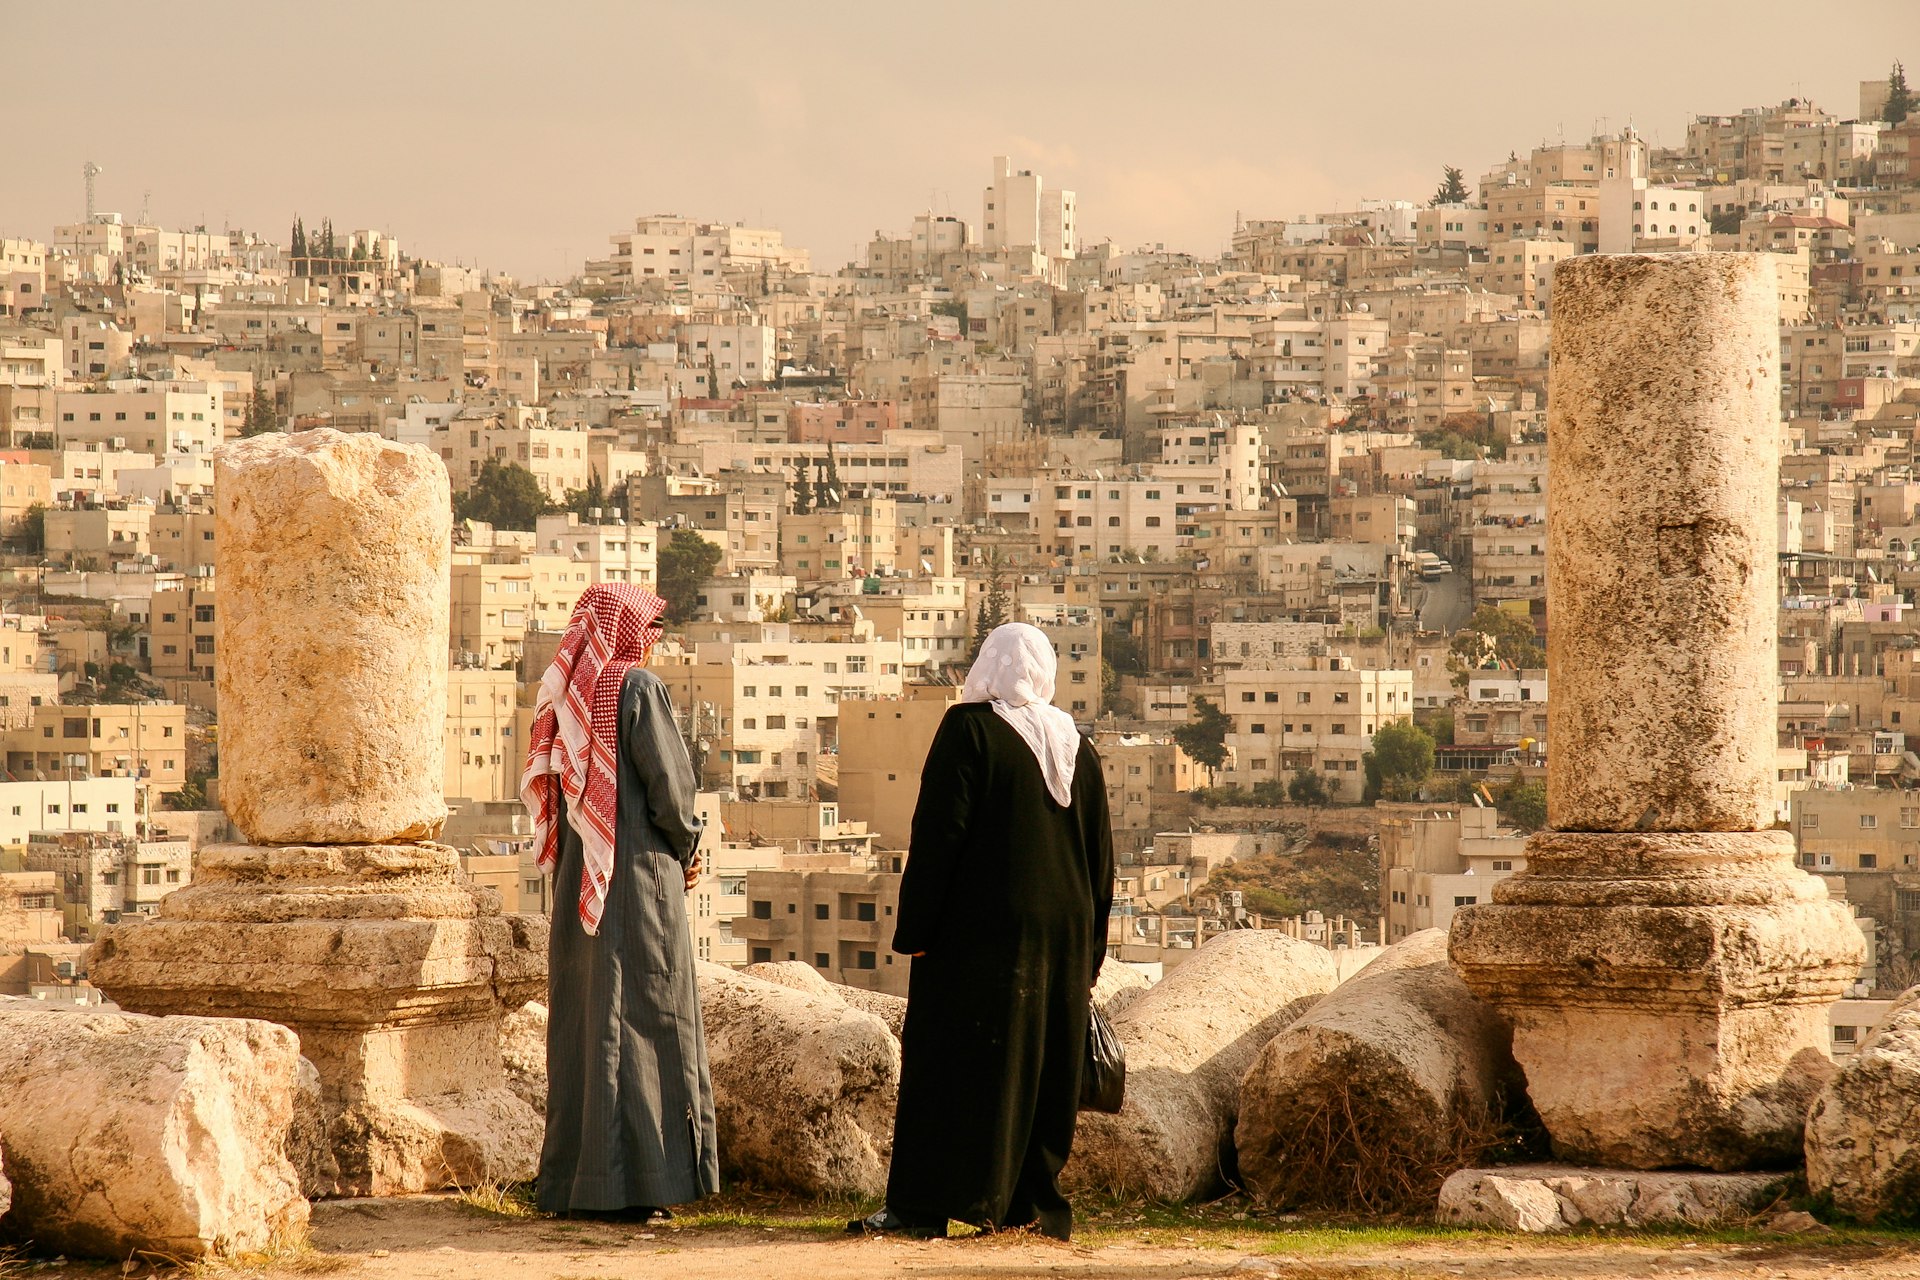 A Jordanian Couple views the Jordanian capital of Amman from the Hill of the Citadel, or Jabal al-Qal'a